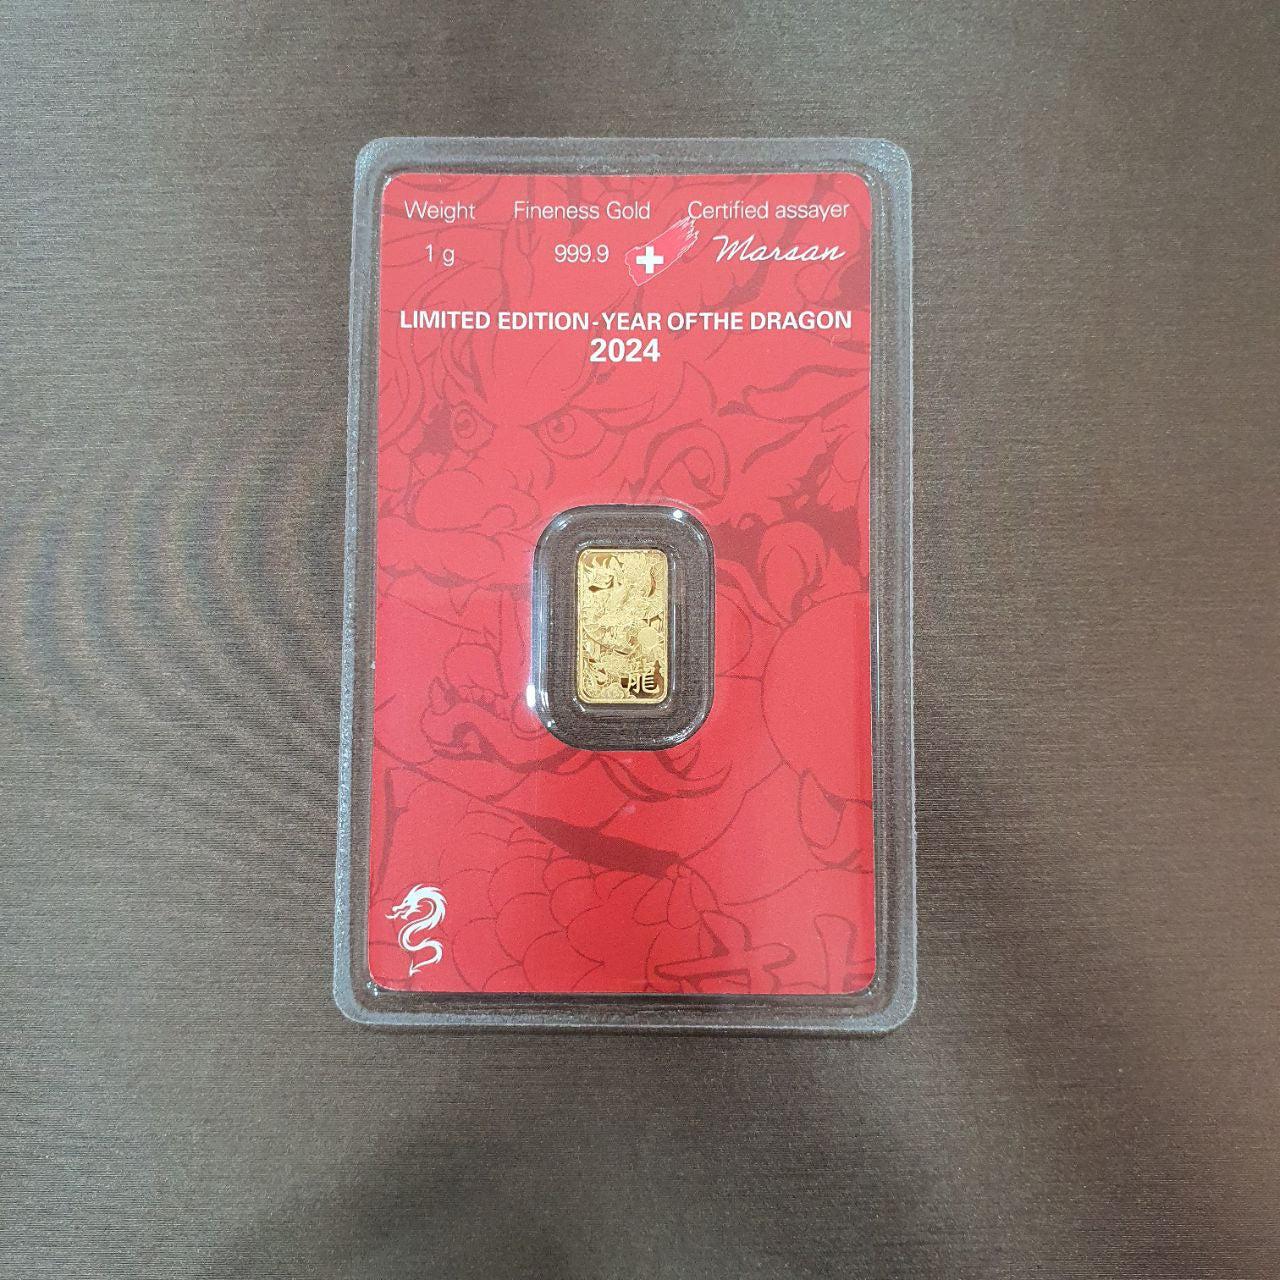 24k Gold Argor Dragon 5 Grams Gold Bar-bullion-Best Gold Shop